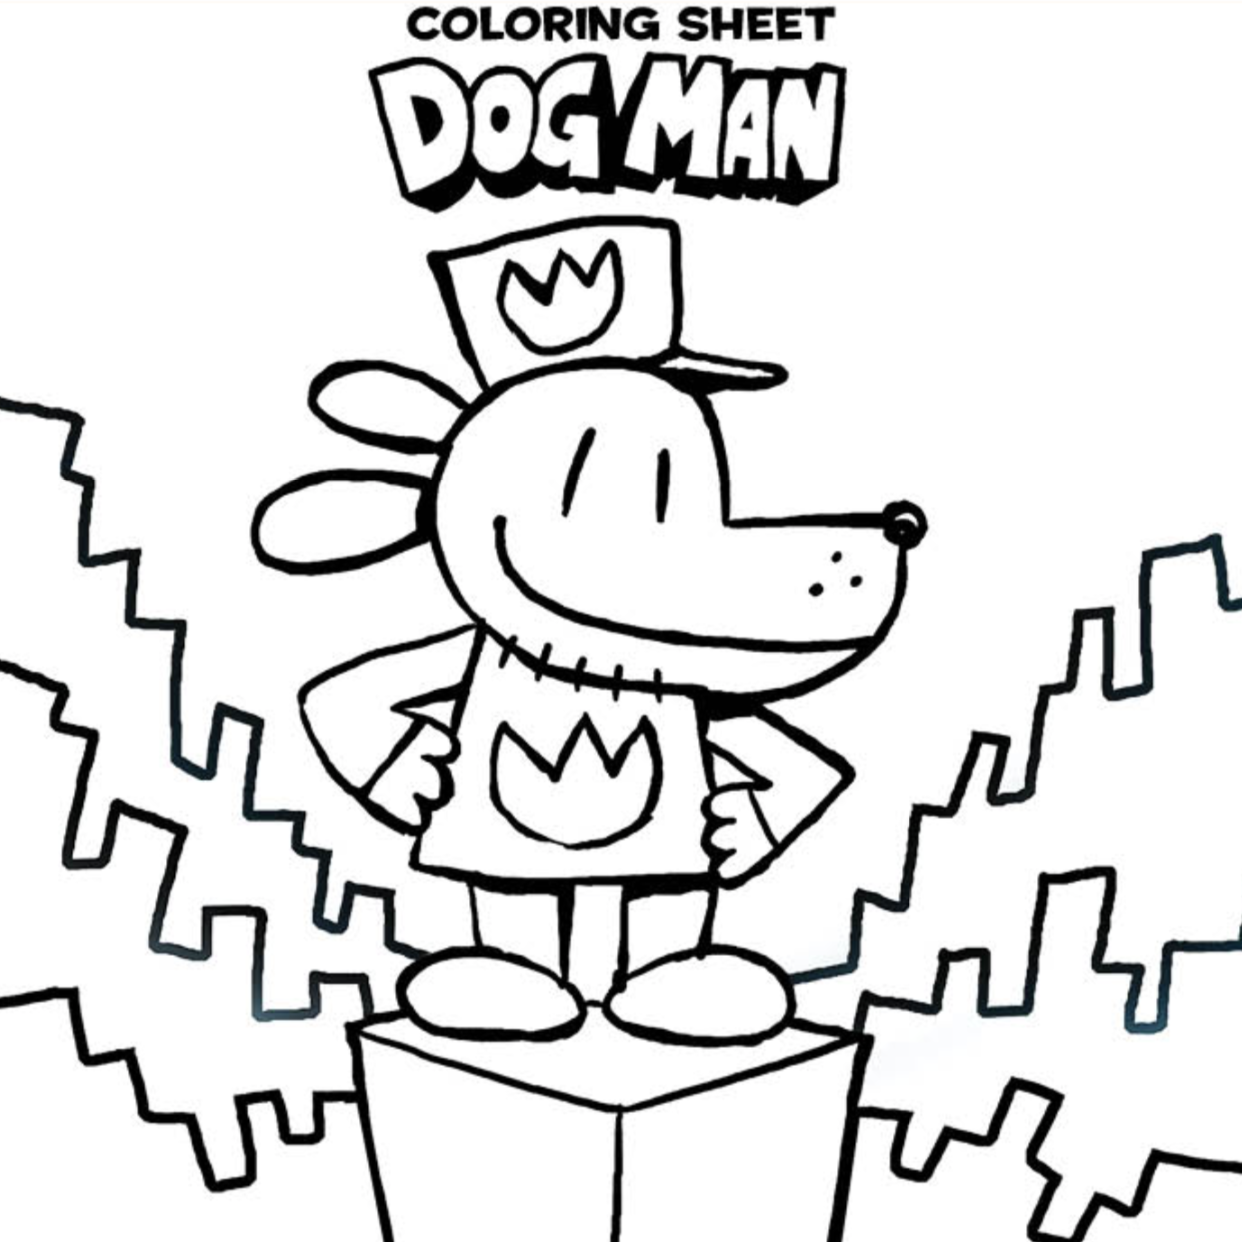 Dogman Sketch Coloring Page